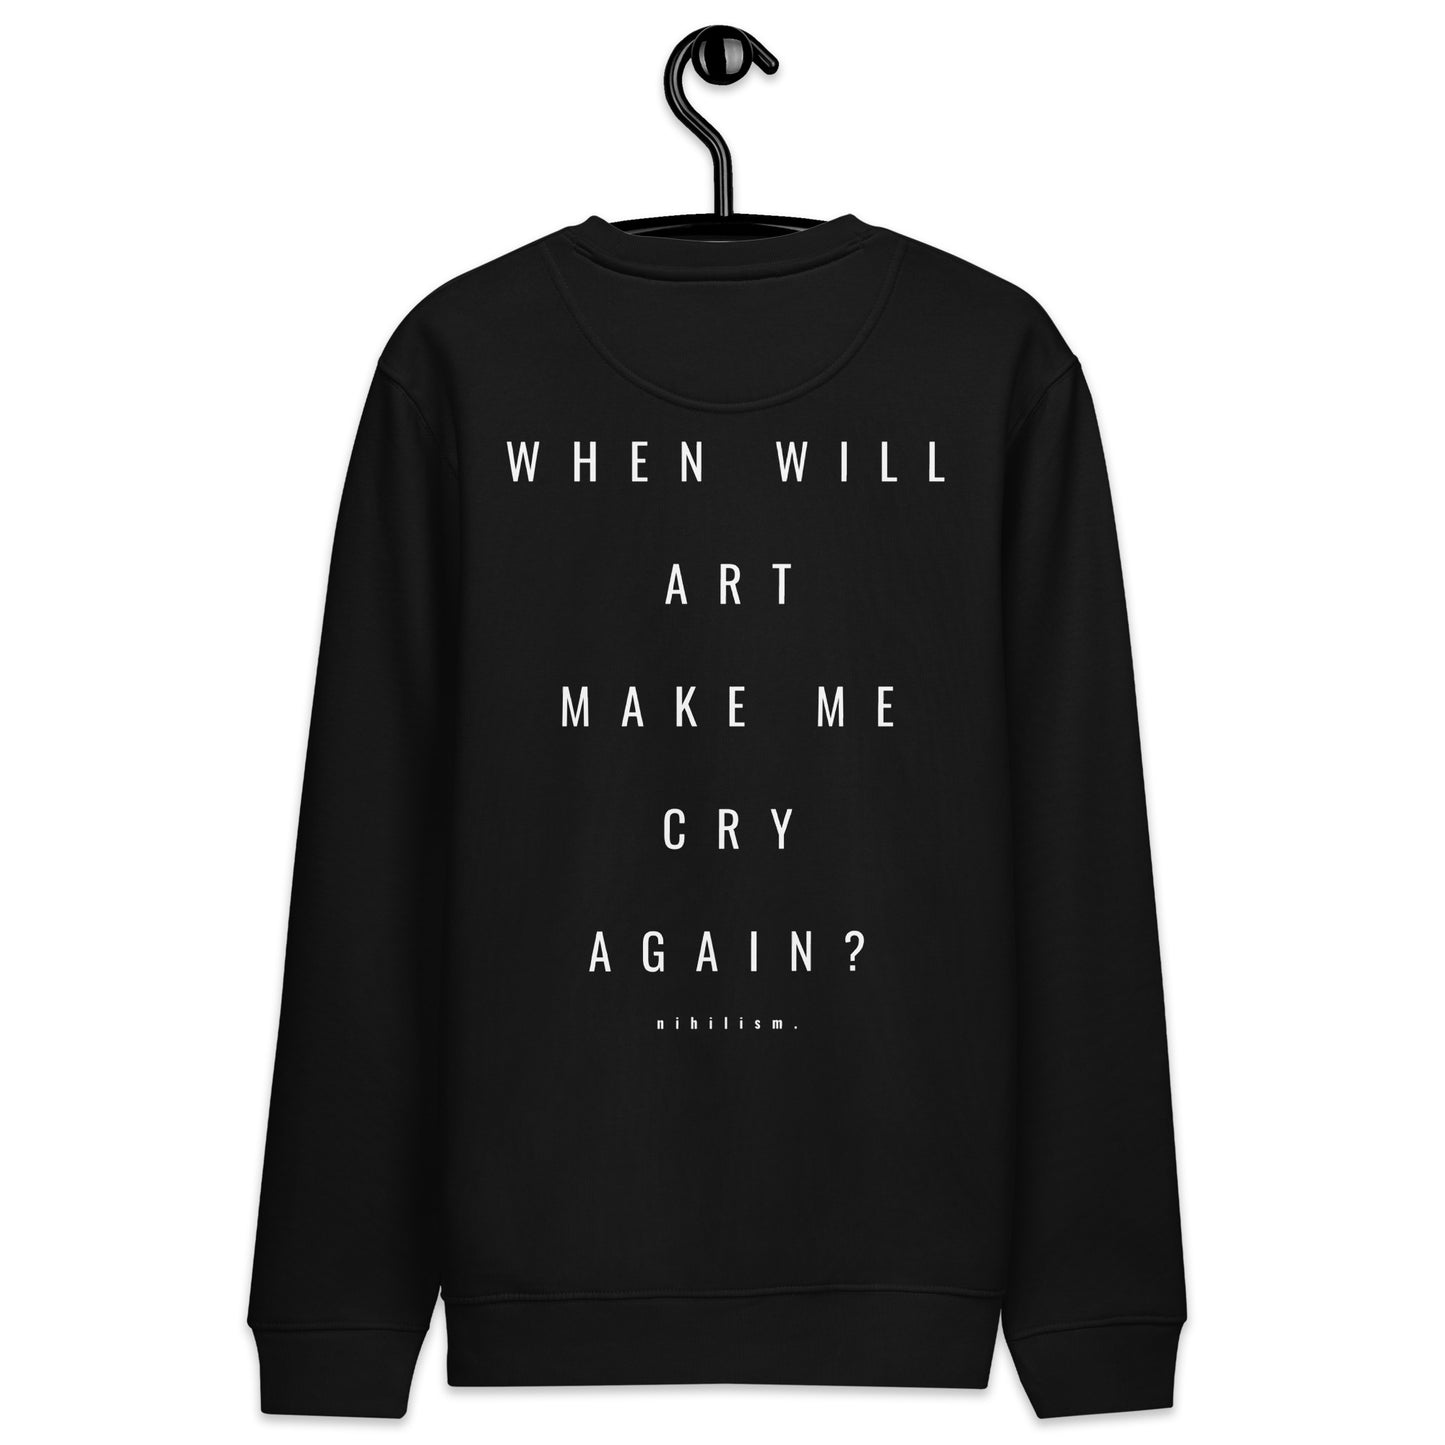 Unisex eco sweatshirt nihilism strip "When will art make me cry again?"